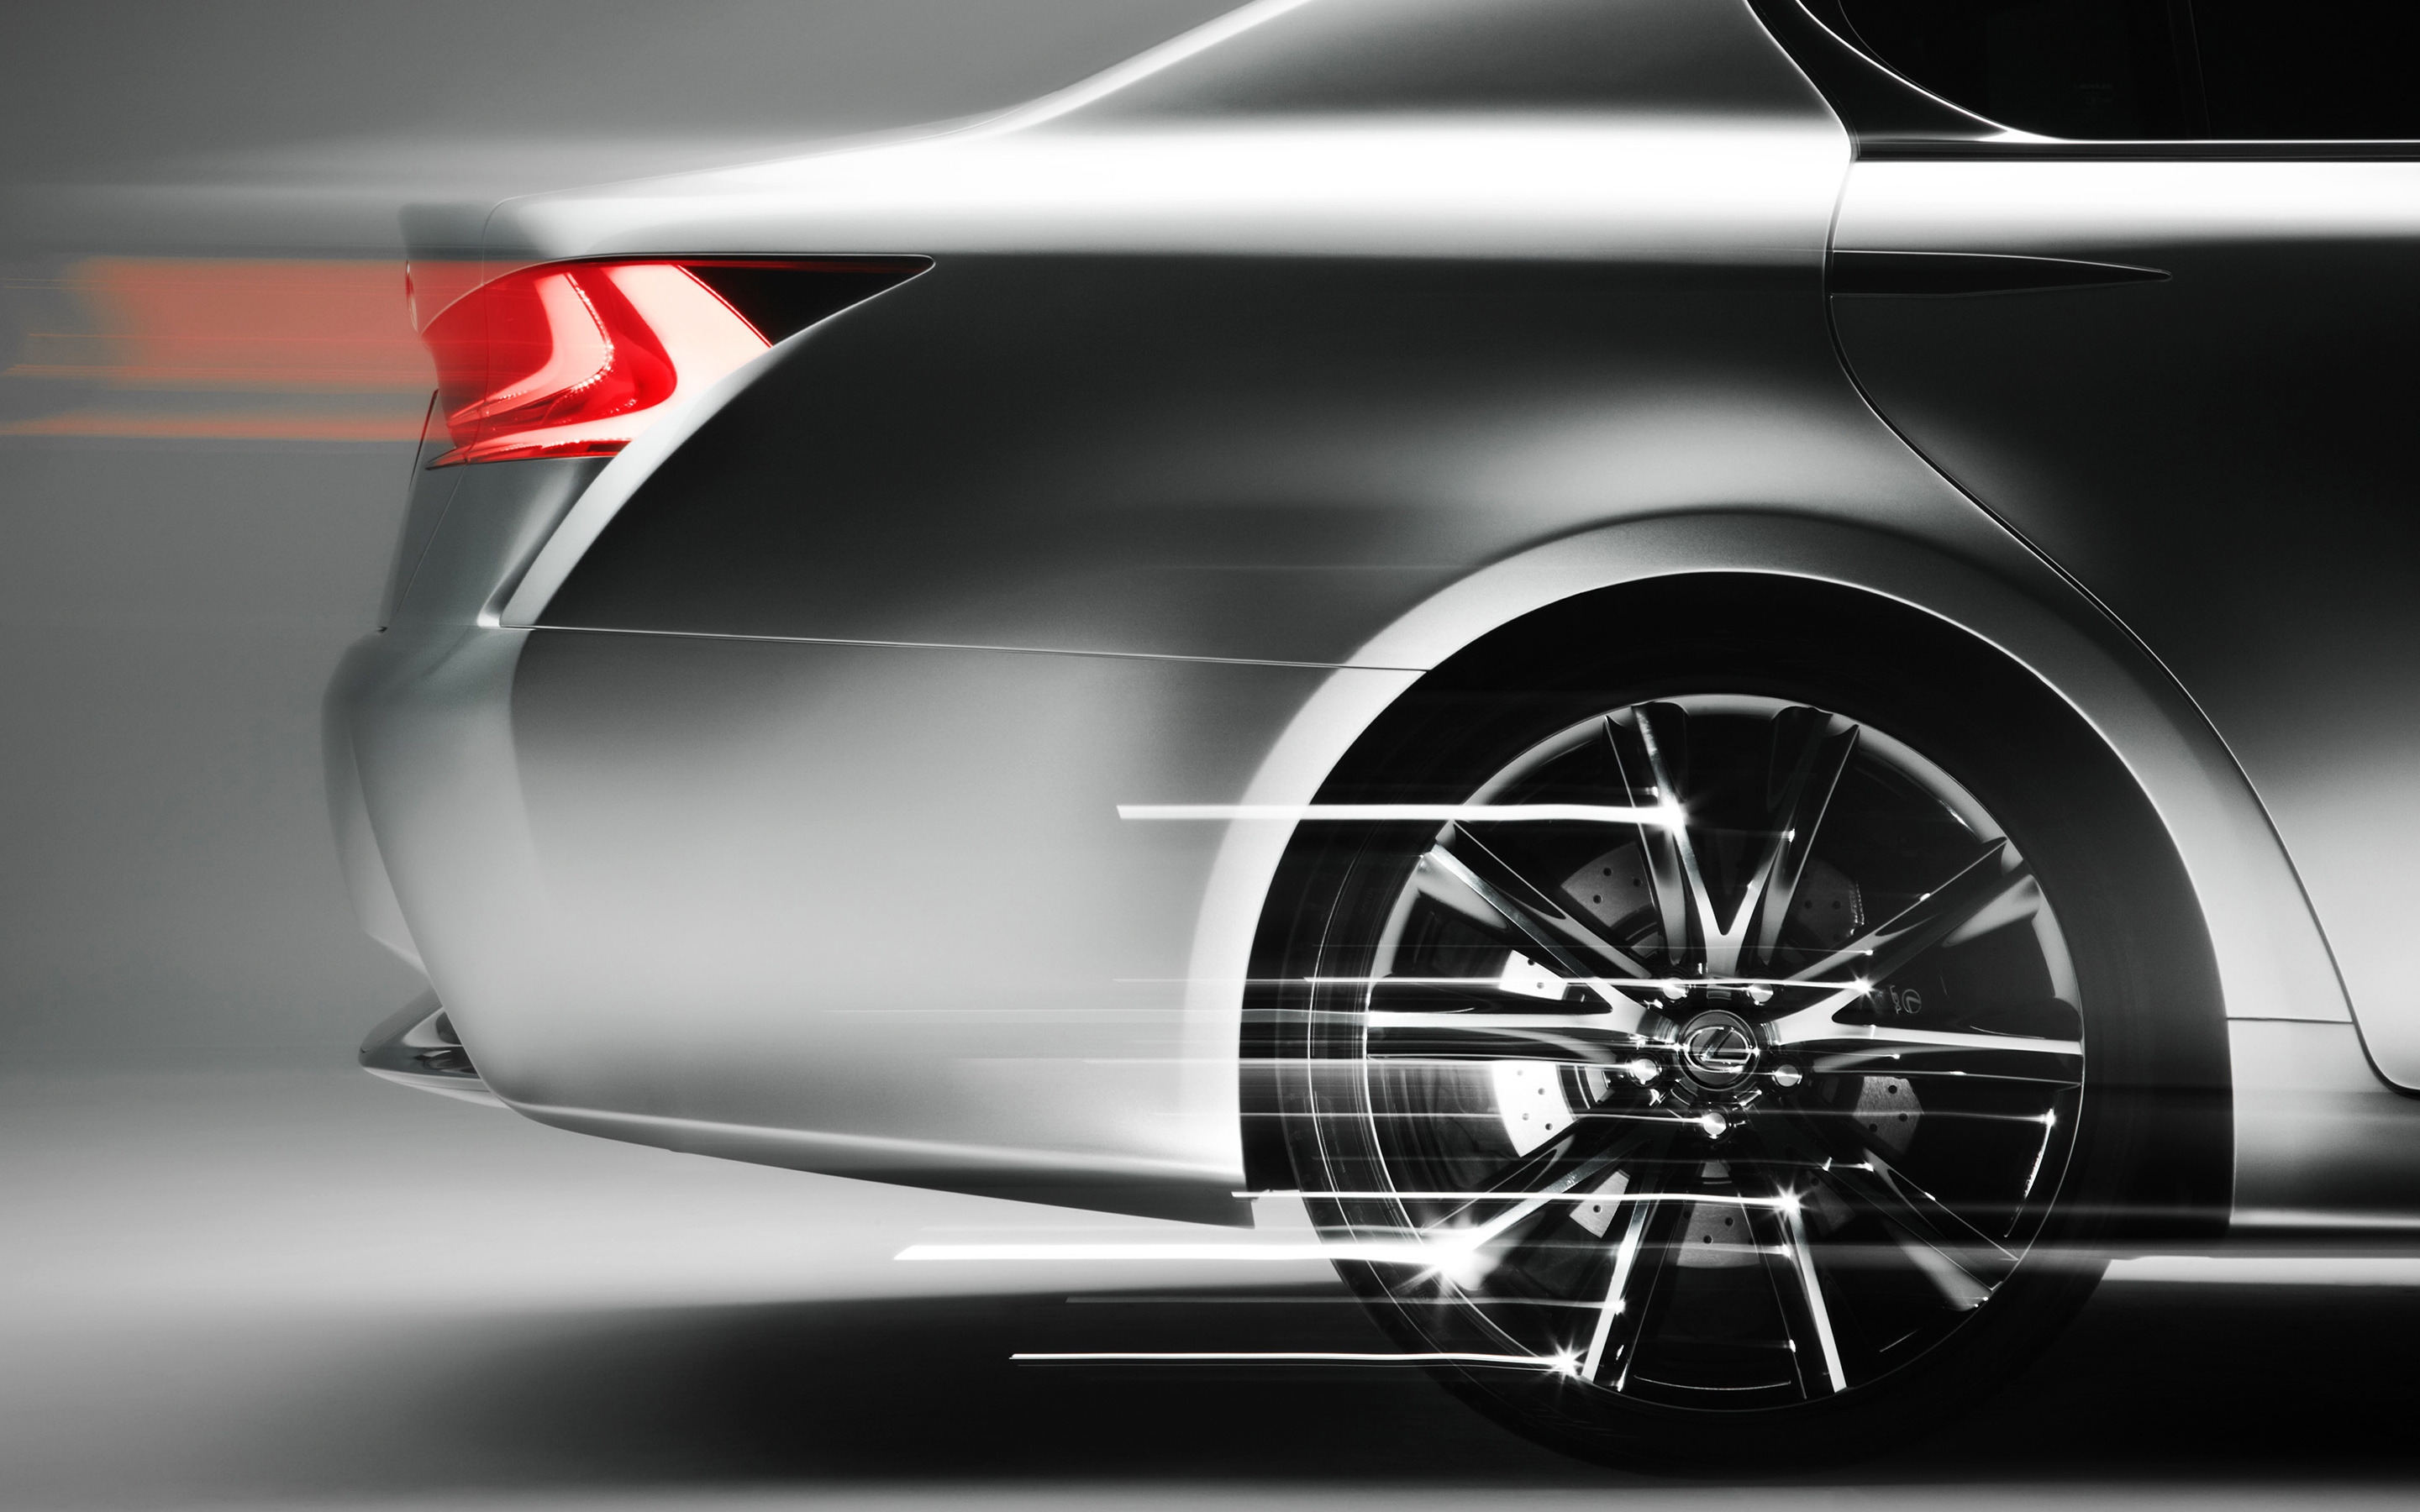 Lexus LF-GH Concept for 2880 x 1800 Retina Display resolution